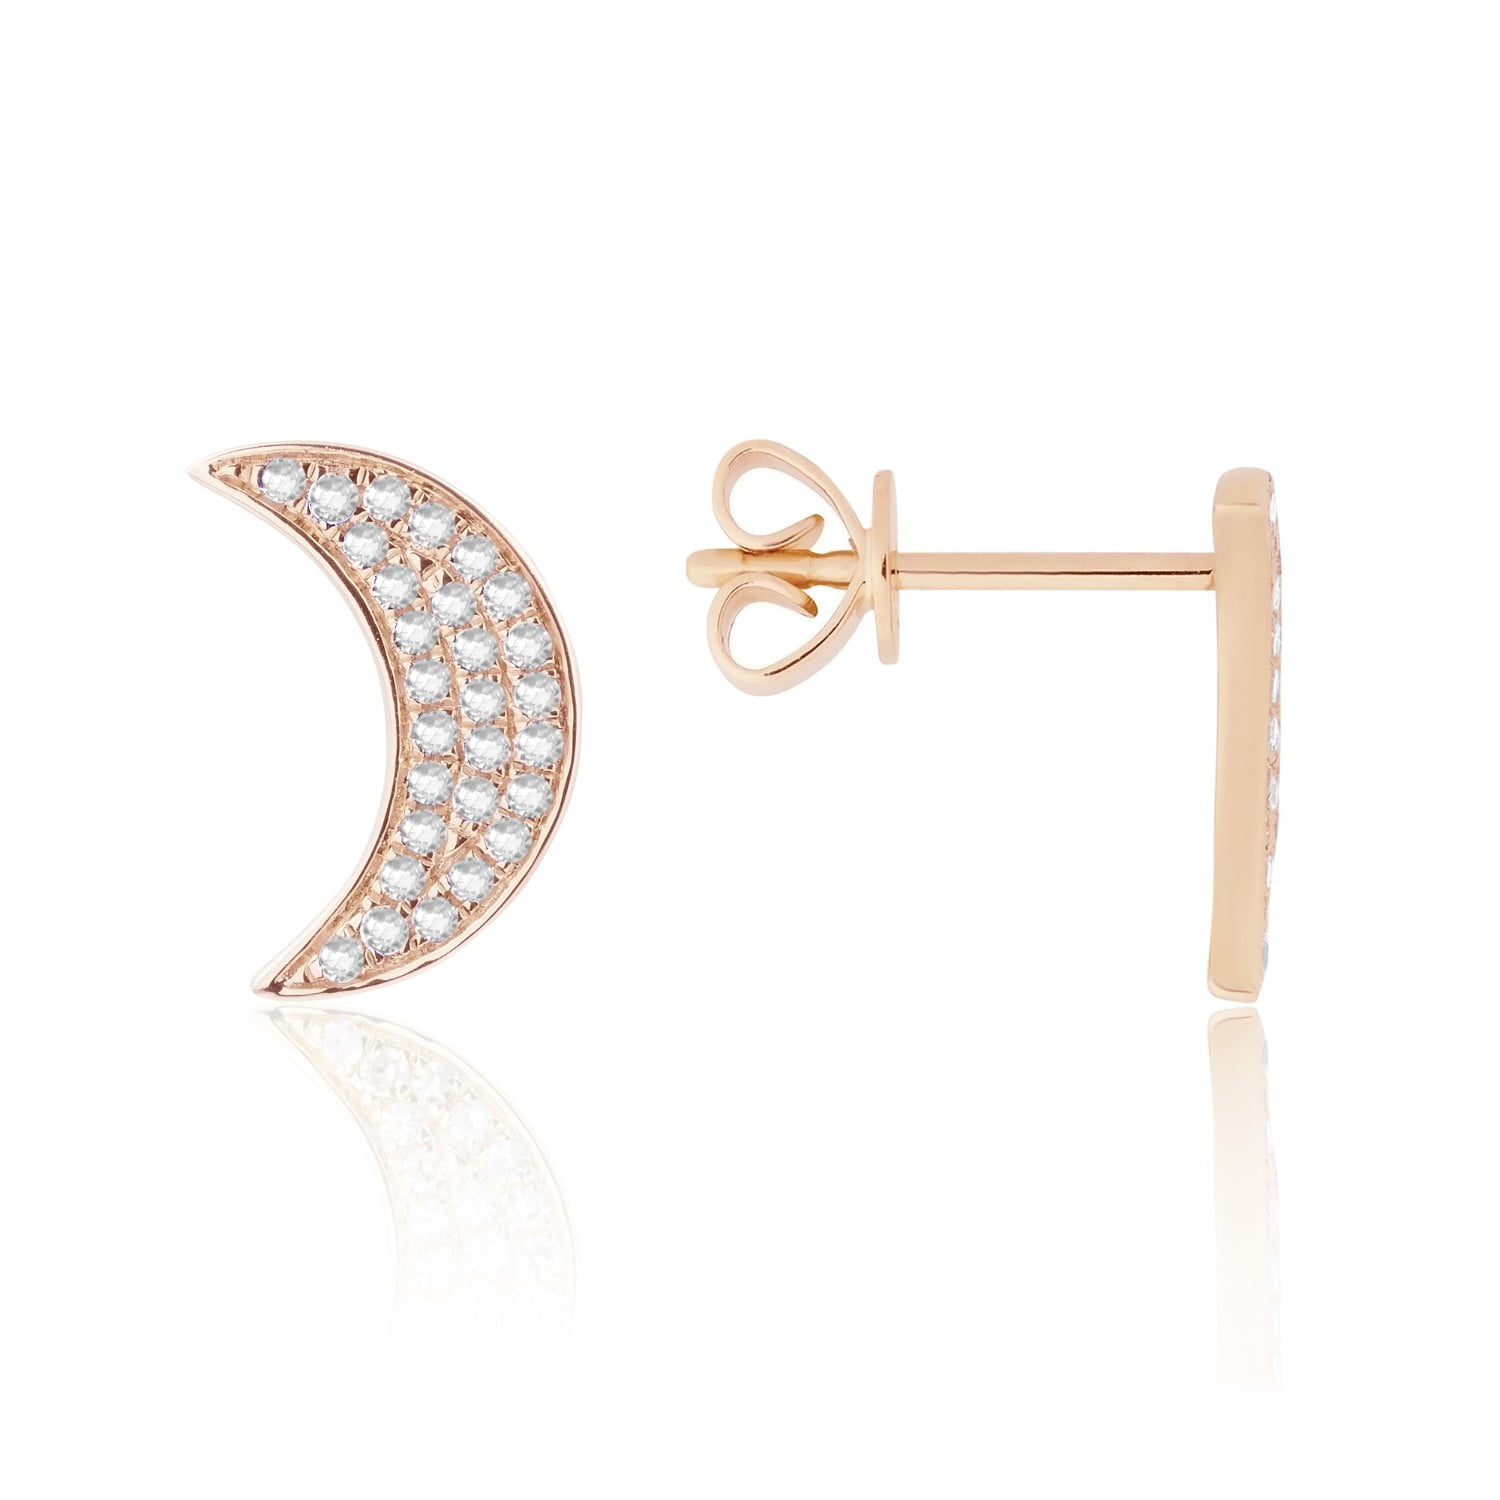 Mercury Ring 14K White Gold Earring Studs LGTXE07067R500-GW3, Ellsworth  Jewelers